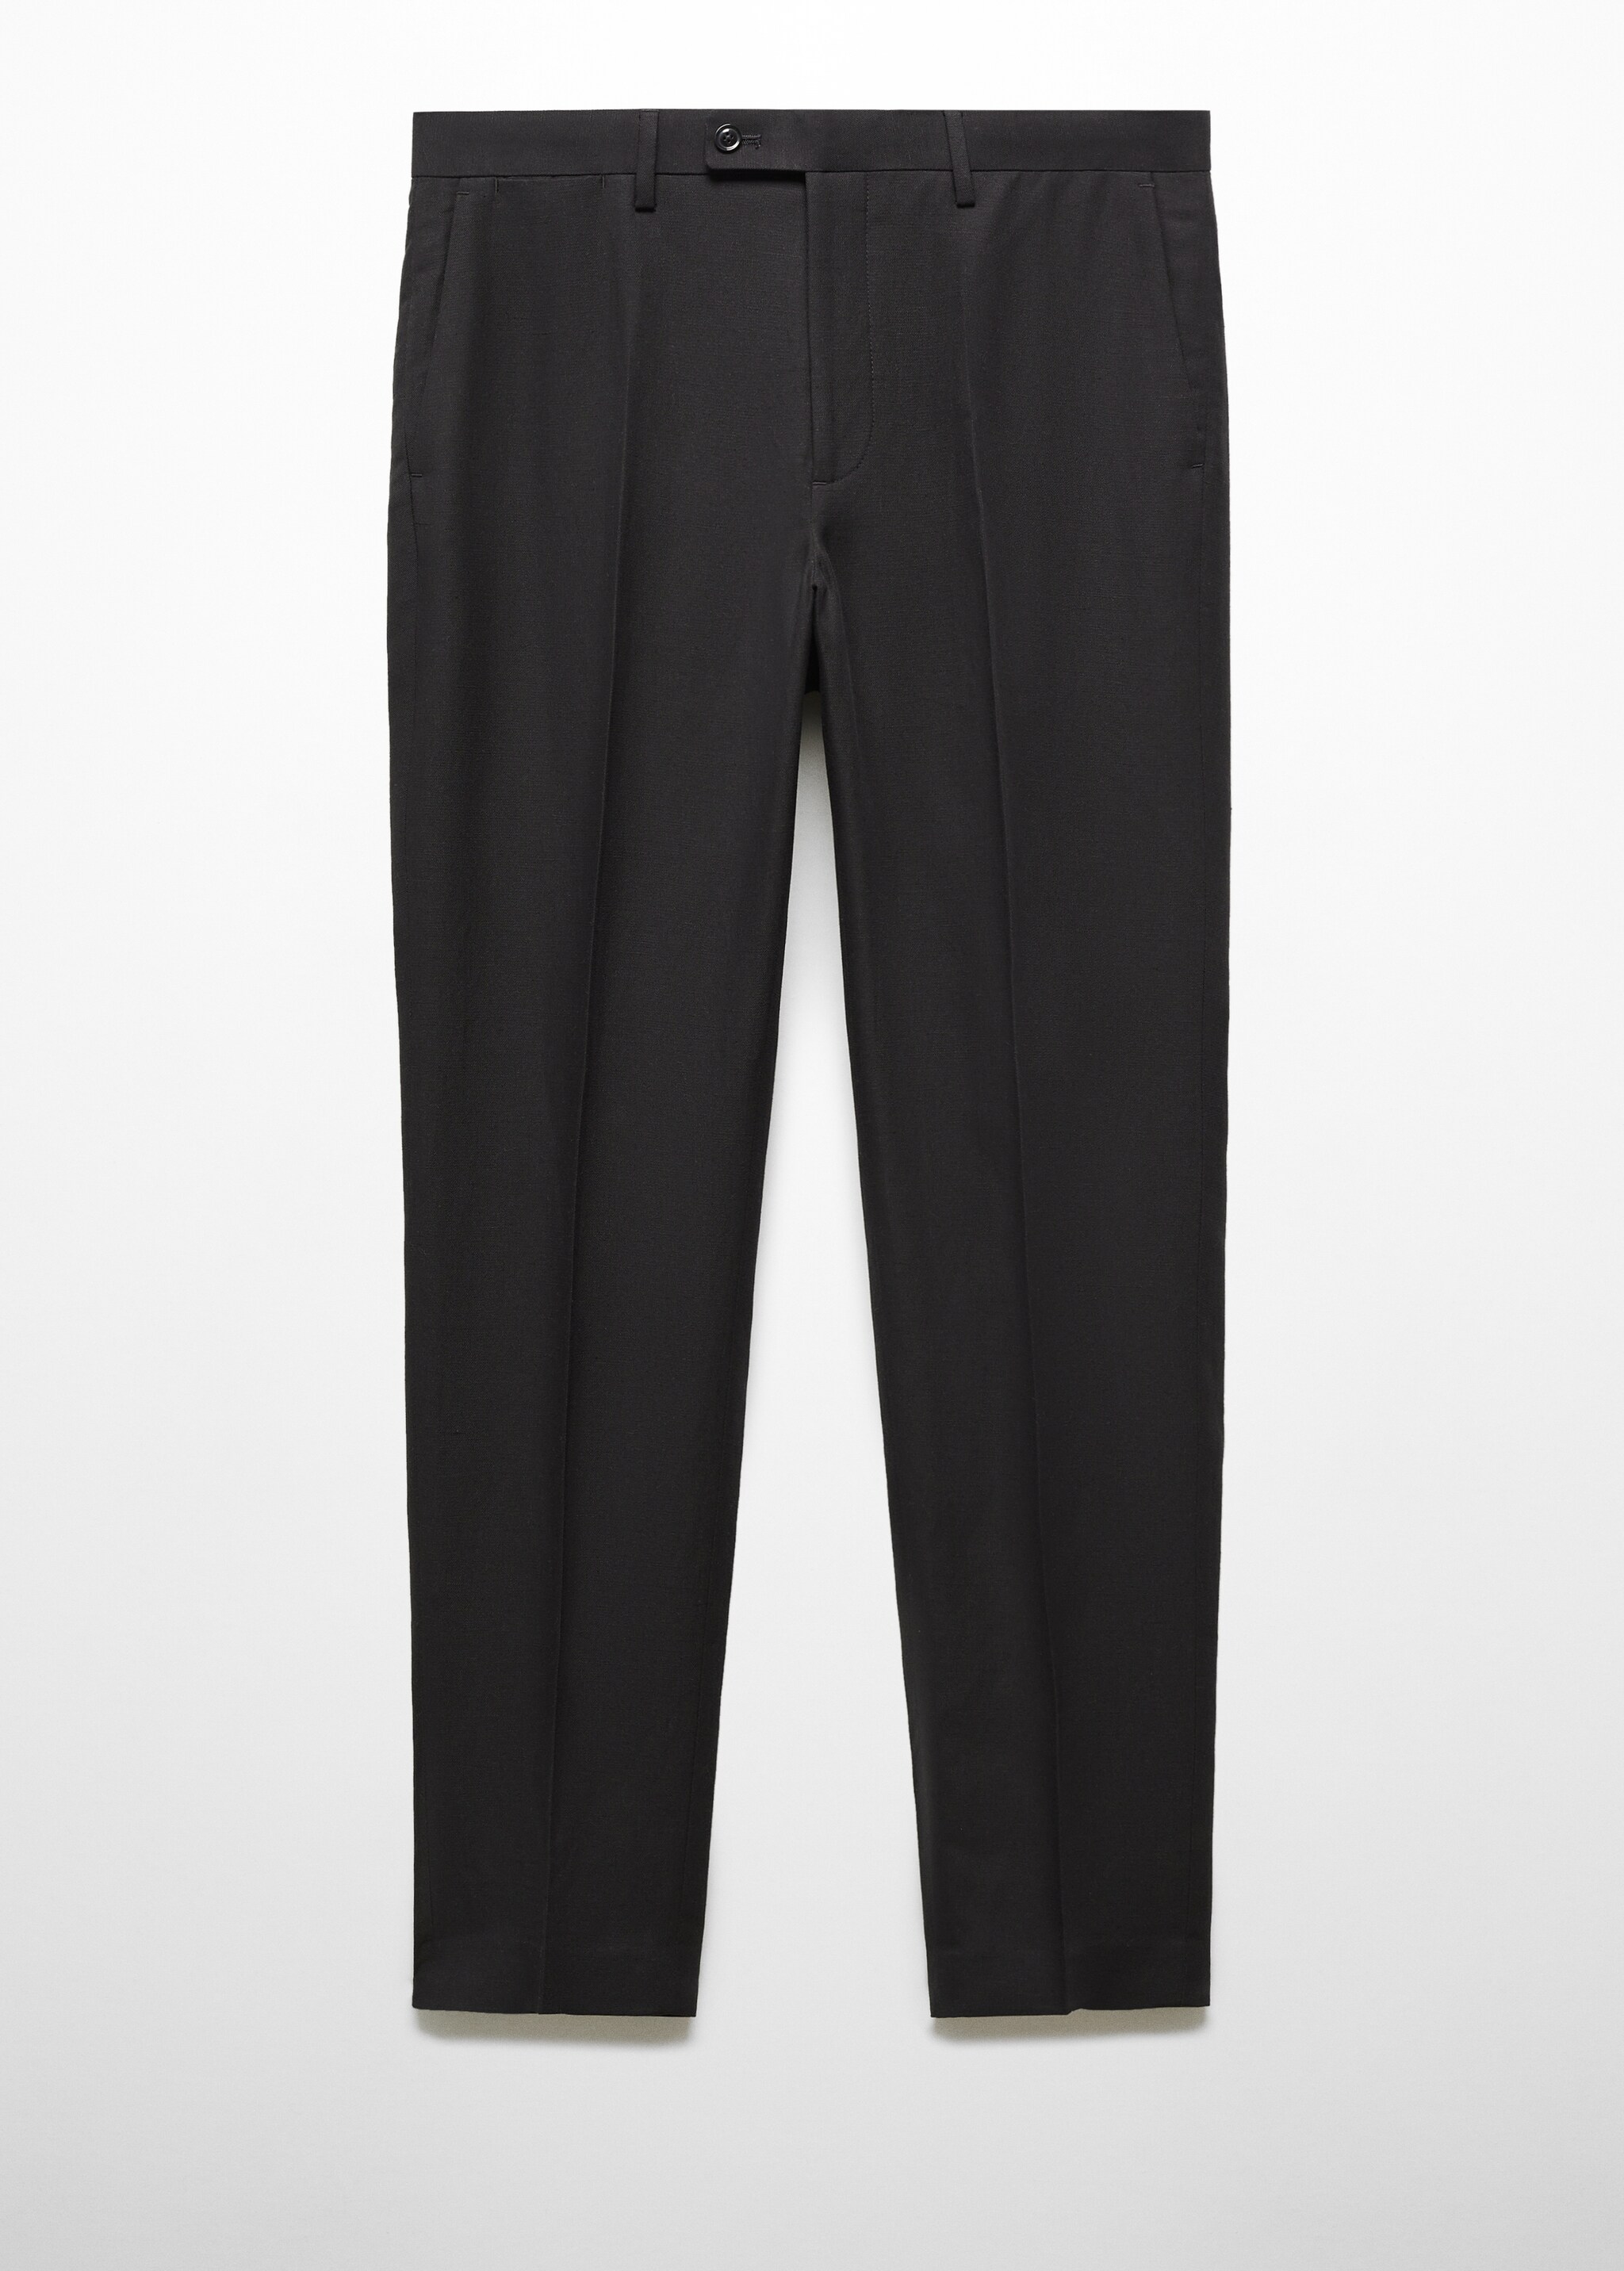 Linen lyocell suit pants - Article without model